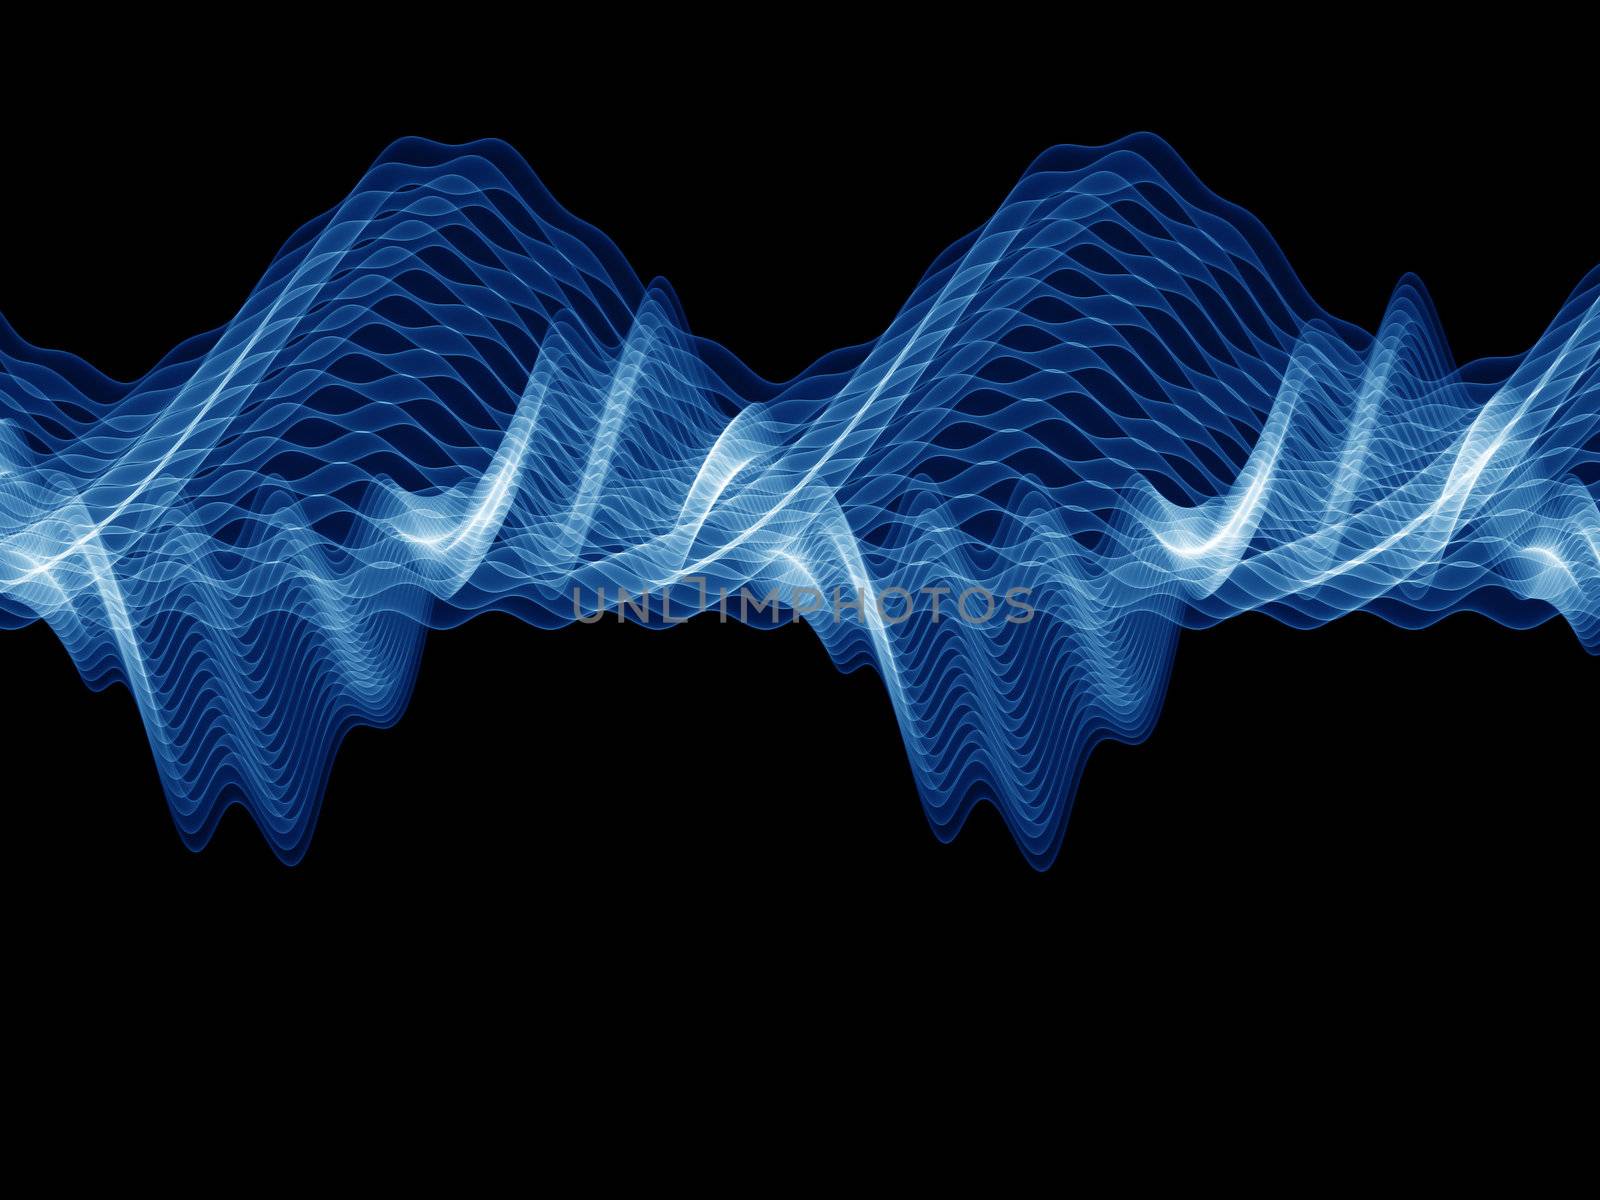 Sound Sine Waves by agsandrew